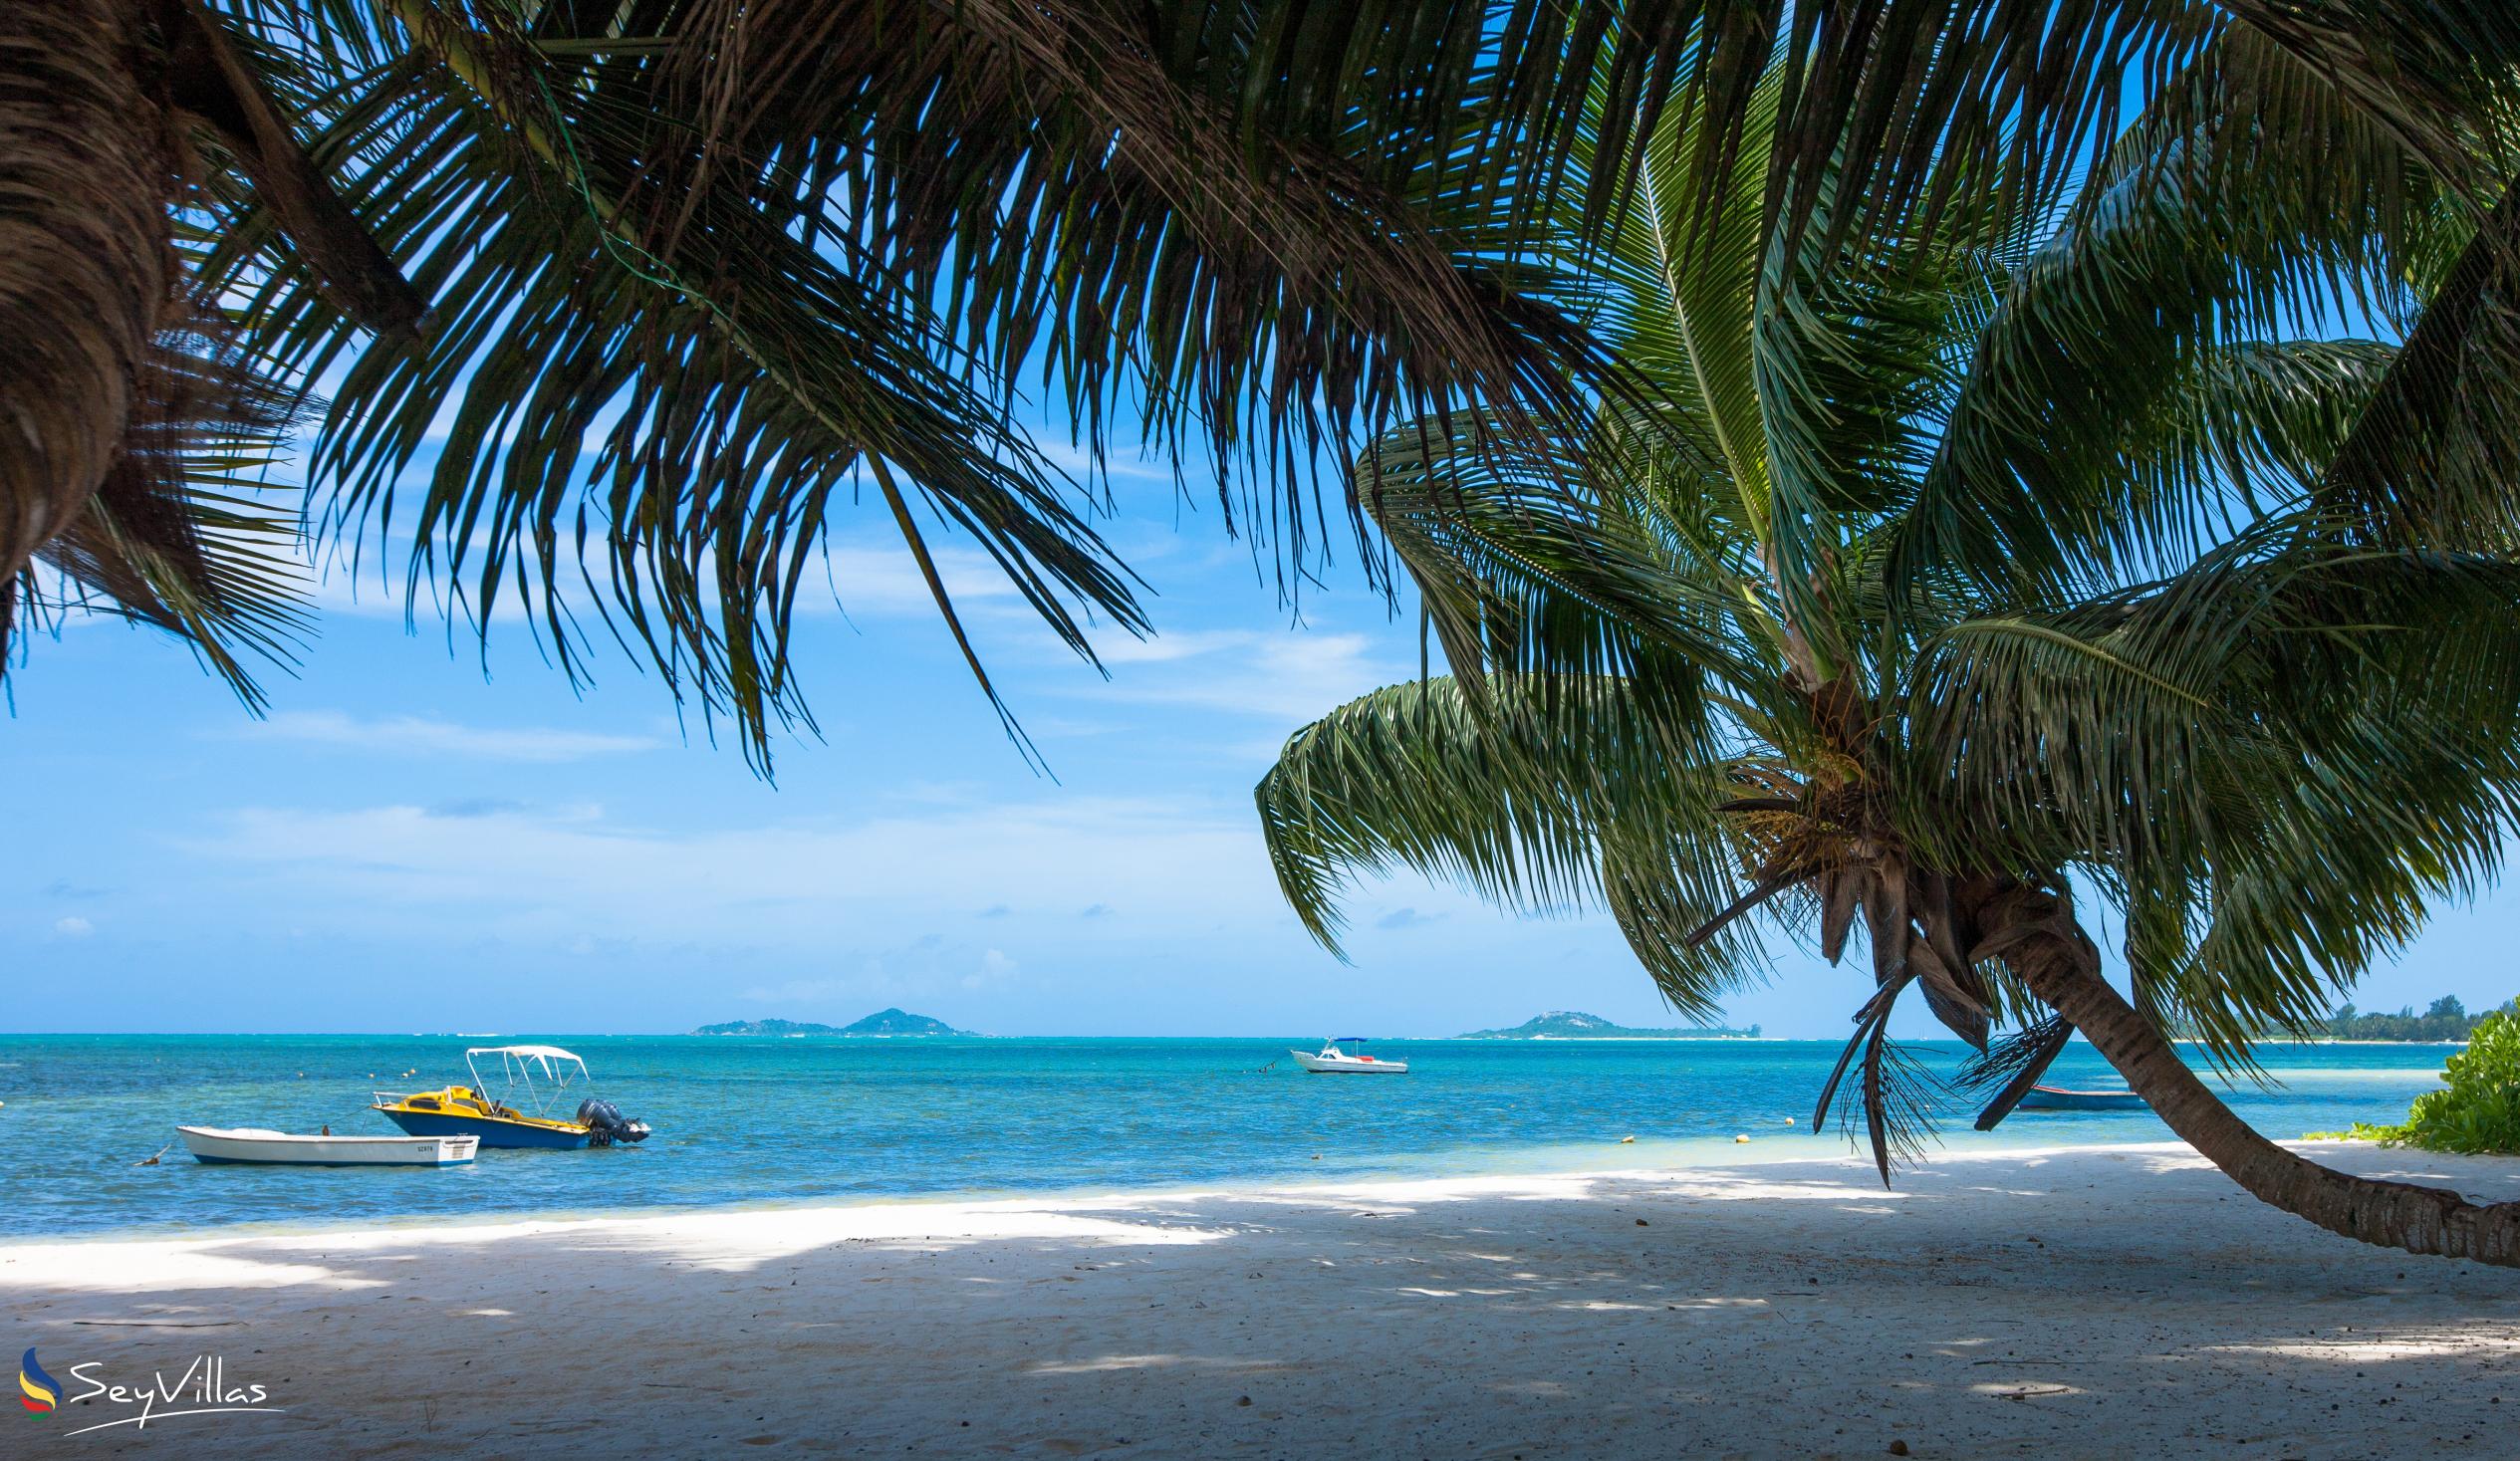 Foto 72: Le Relax Beach Resort - Plages - Praslin (Seychelles)